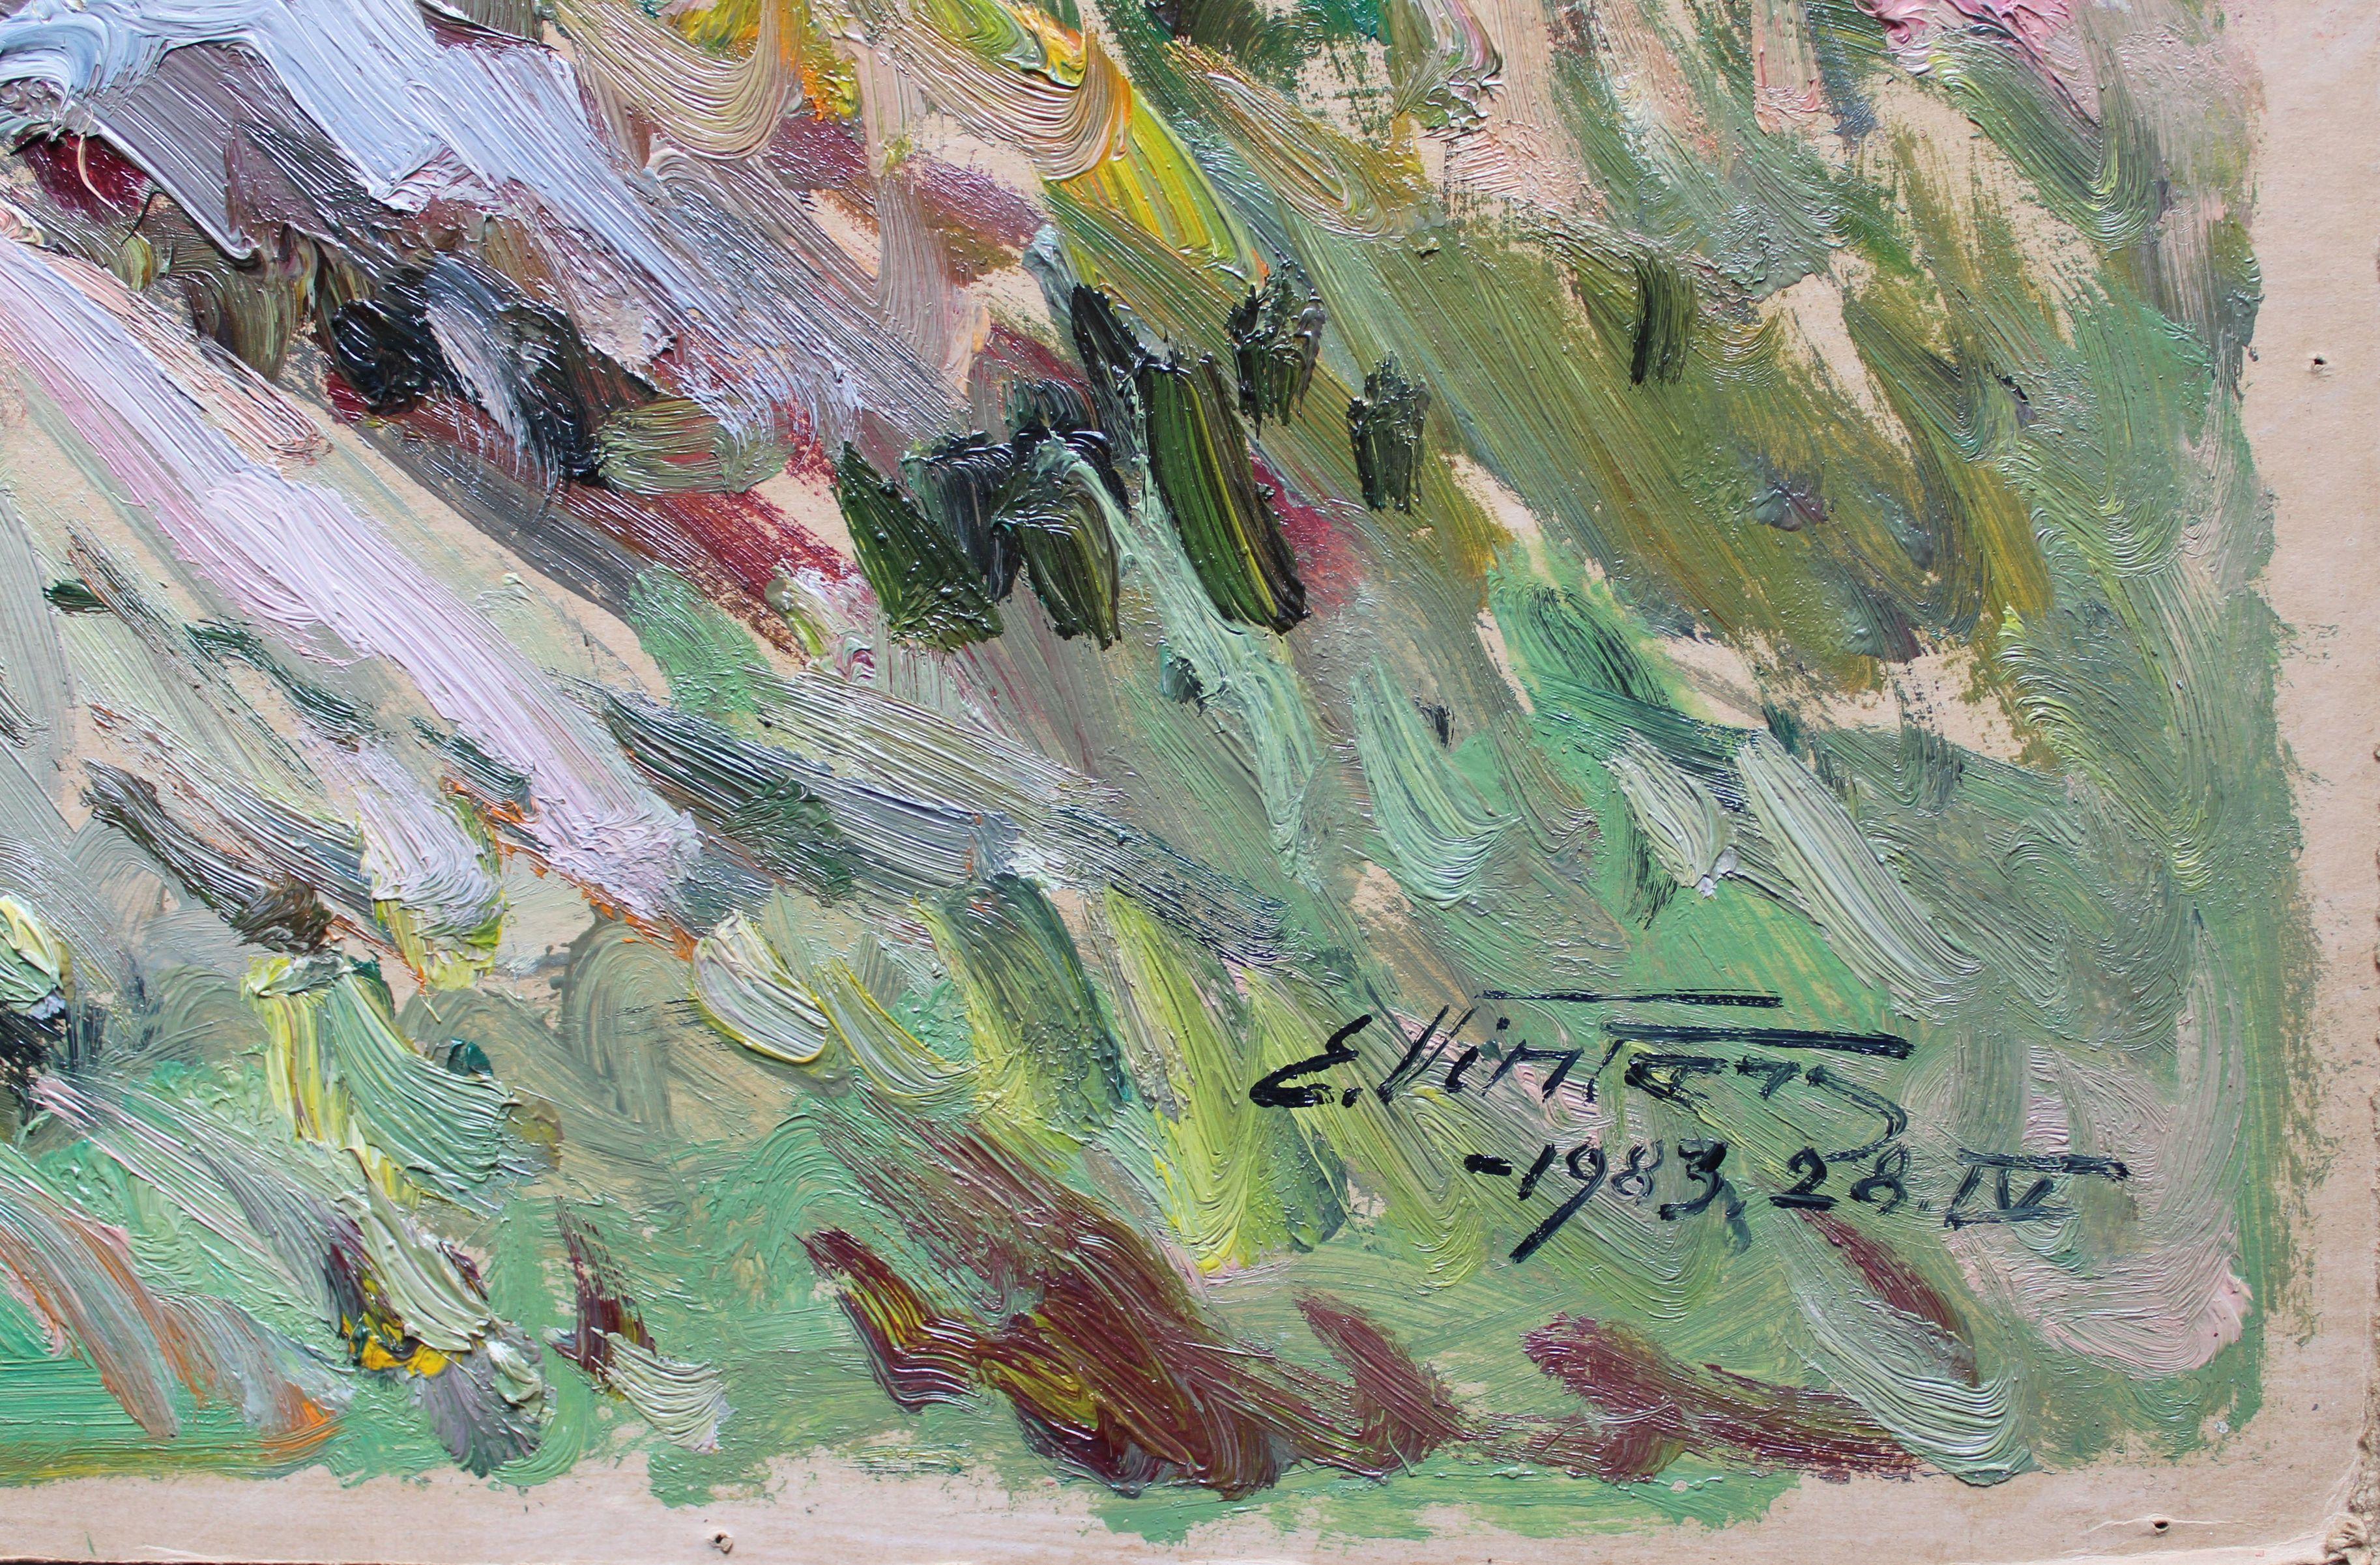 Boulders in der Nähe des Feldes. 1983, Karton, Öl, 68x94 cm
